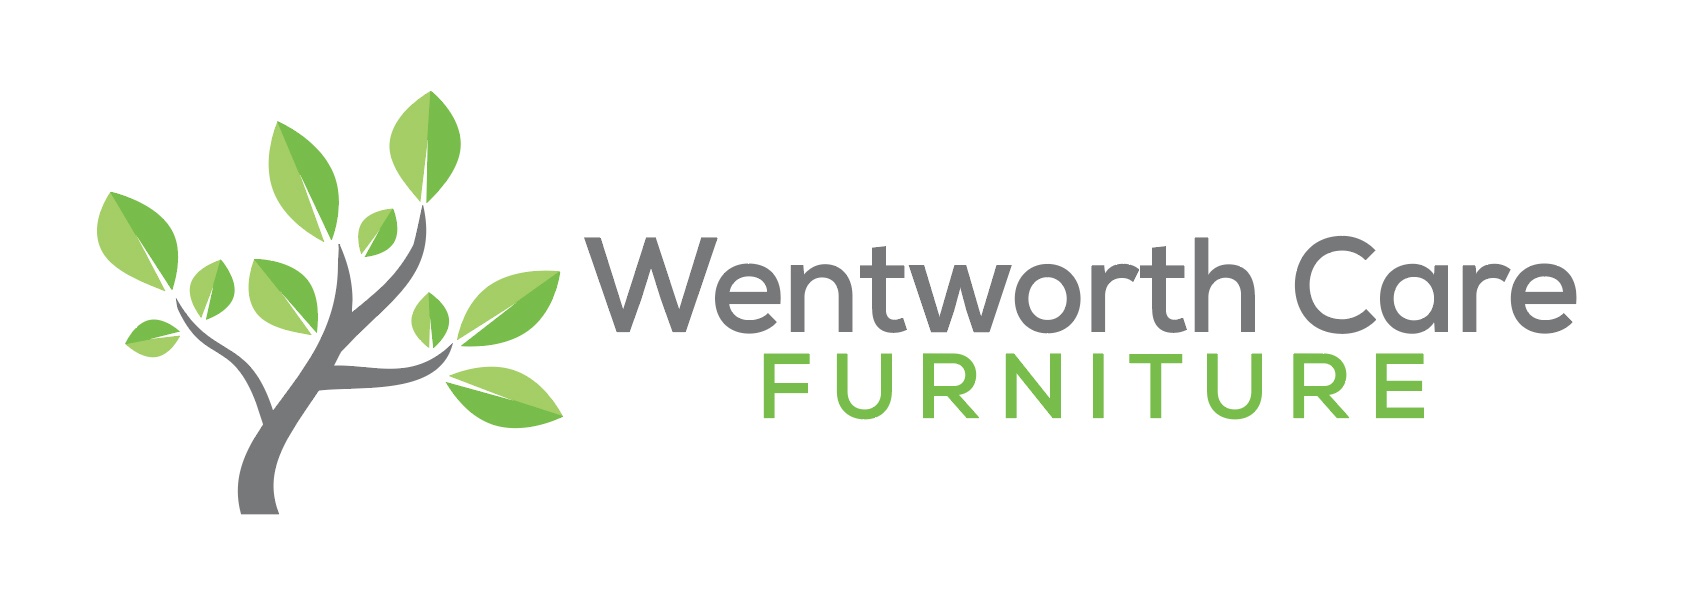 Wentworth Care Furniture